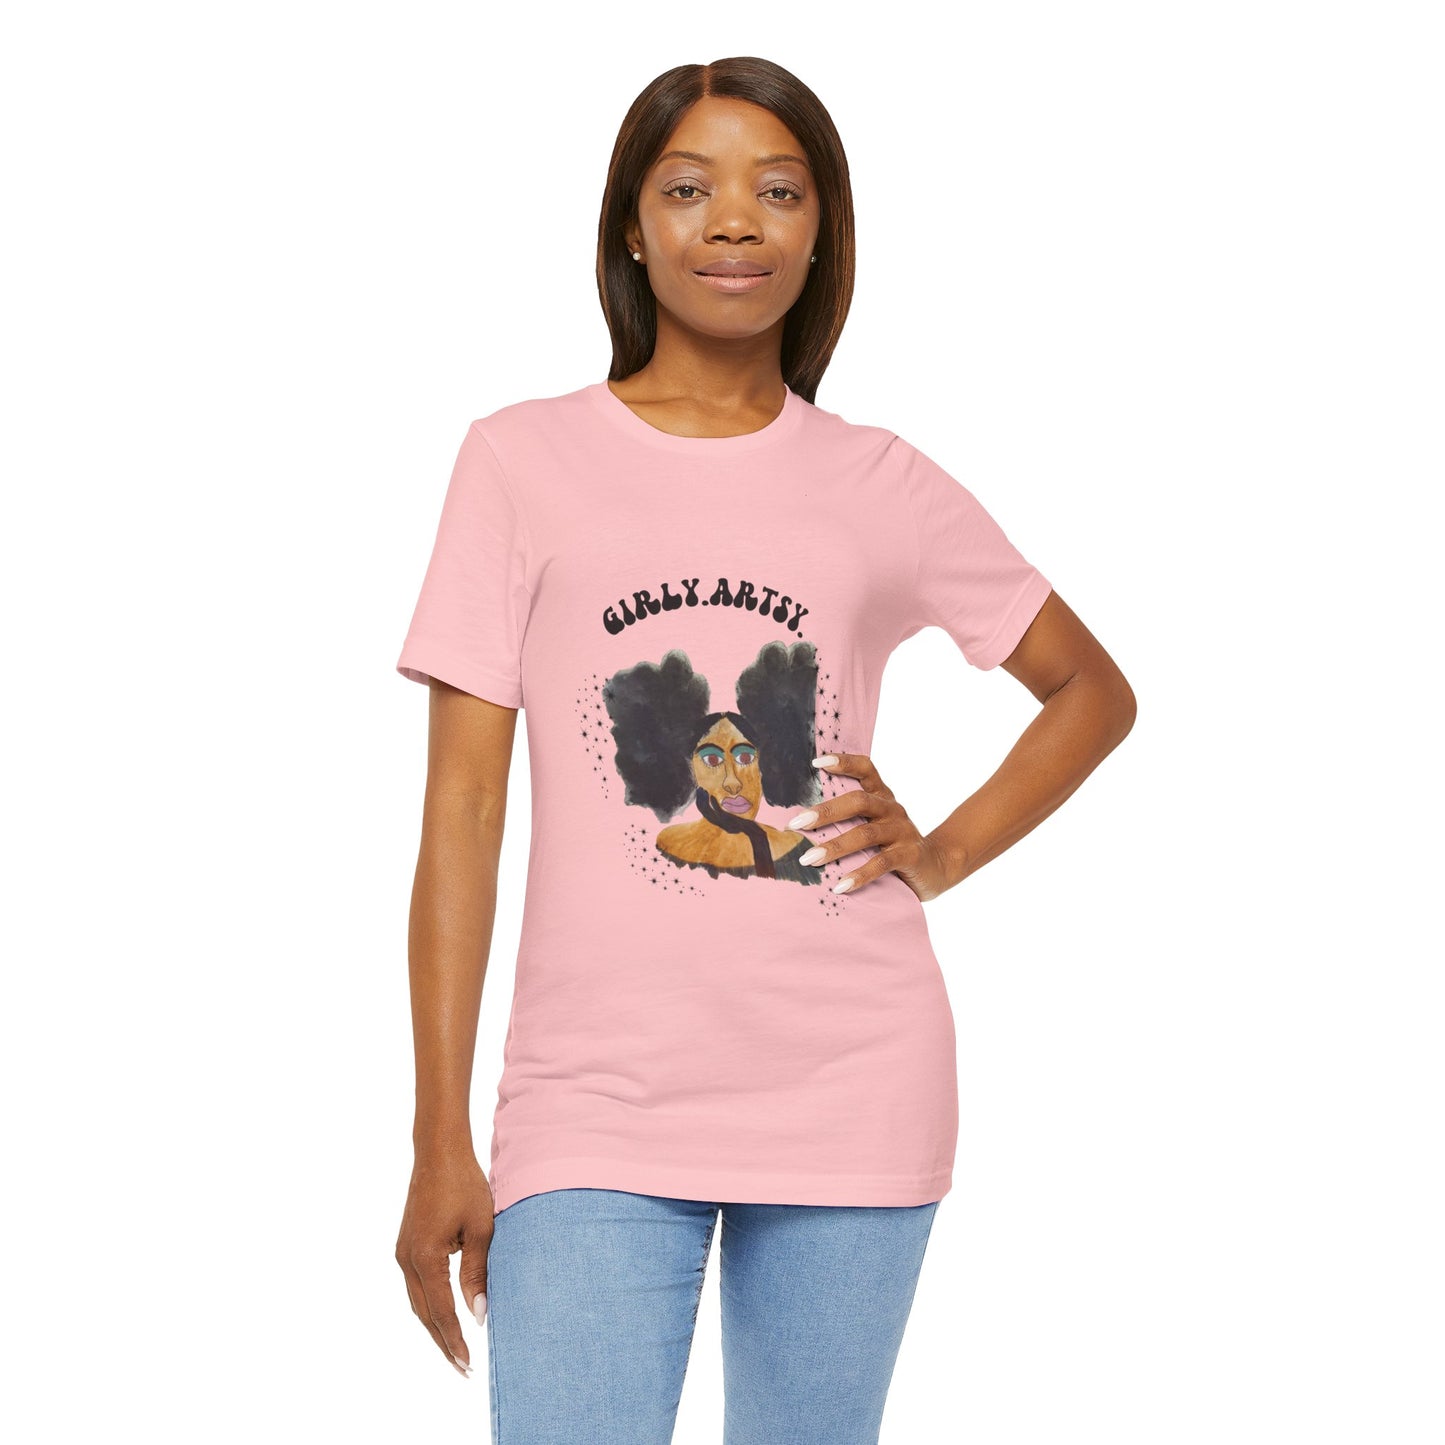 GIRLY. ARTSY. #6, Hand Painted Graphic T-shirt, Women's T-shirt, Black Art Graphic, Black Woman Graphic, Hand-painted Graphic, Retro, Gift for Her, Urban Fashion, Urban Streetstyle, Unisex Jersey Short Sleeve Tee